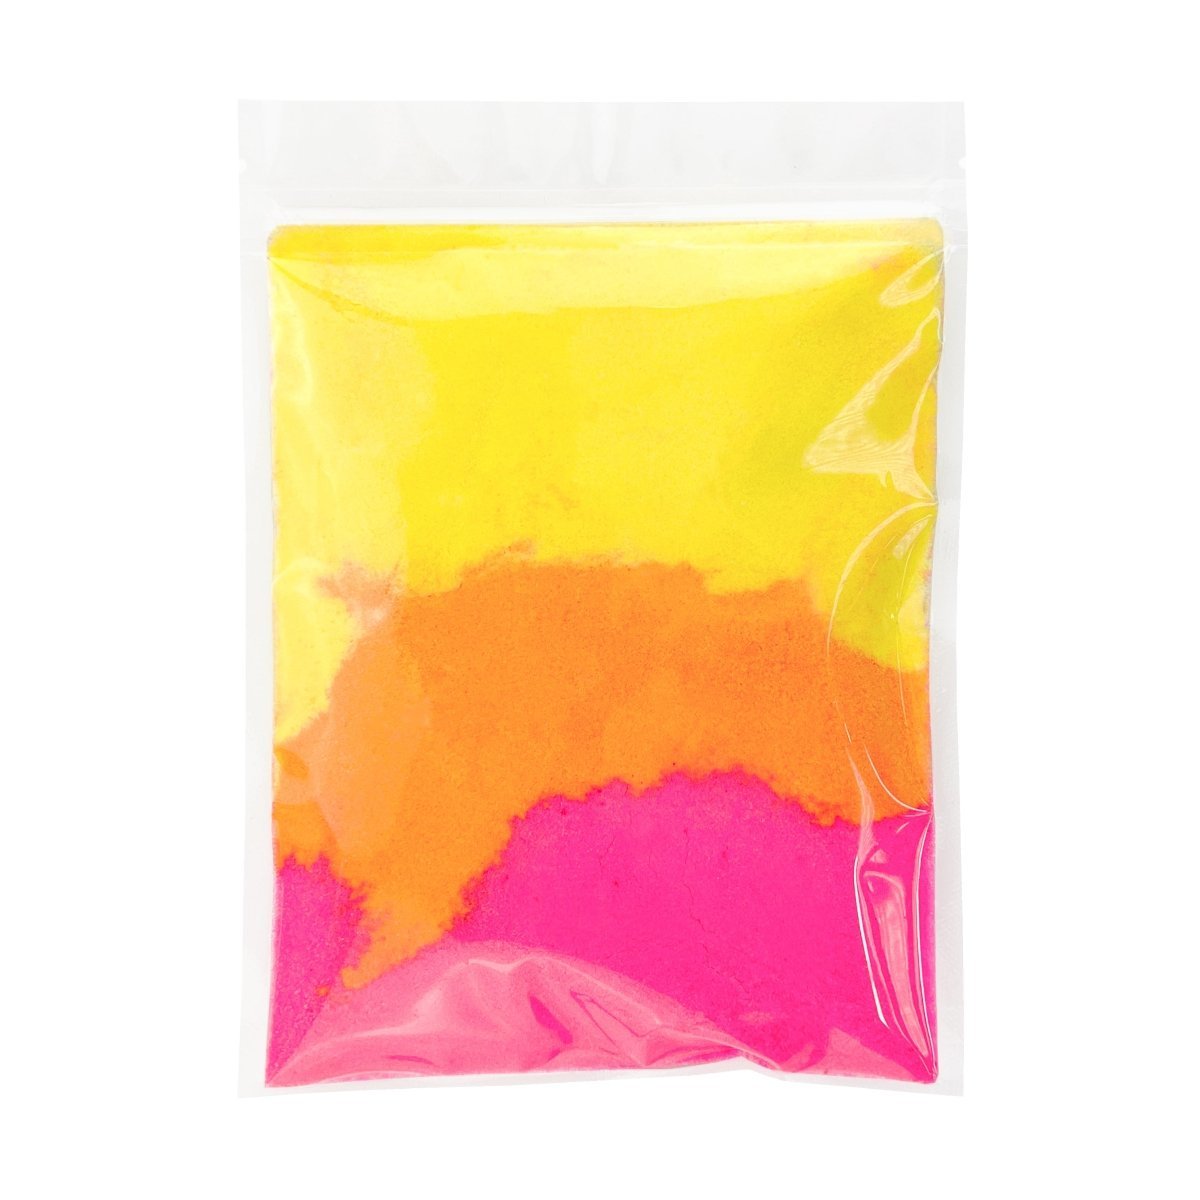 Groovy Babe Bath Dust for Kids & Adults - Colourful Glitters & Mango Nectar Fragrance - Made in Australia by Bath Box